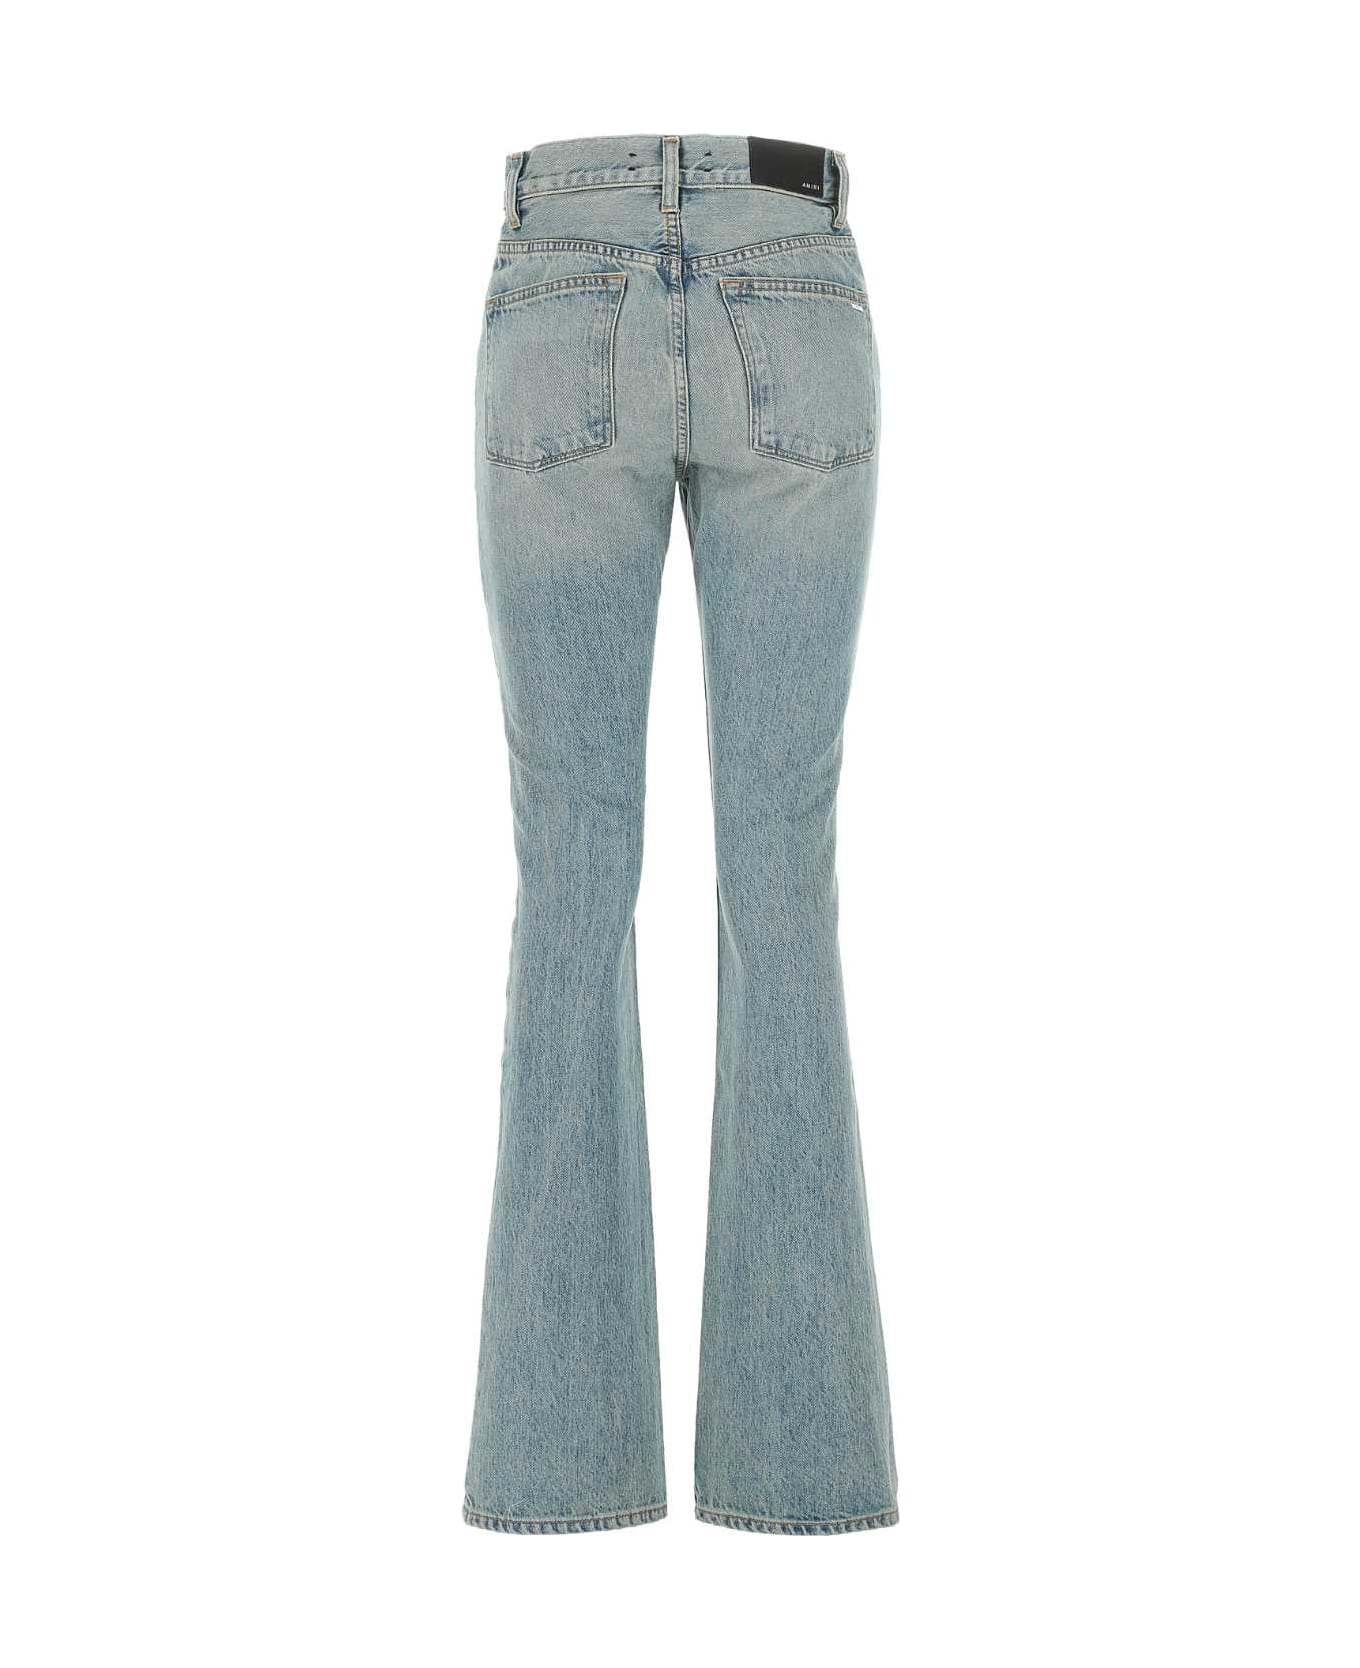 AMIRI Denim Jeans - 875 デニム